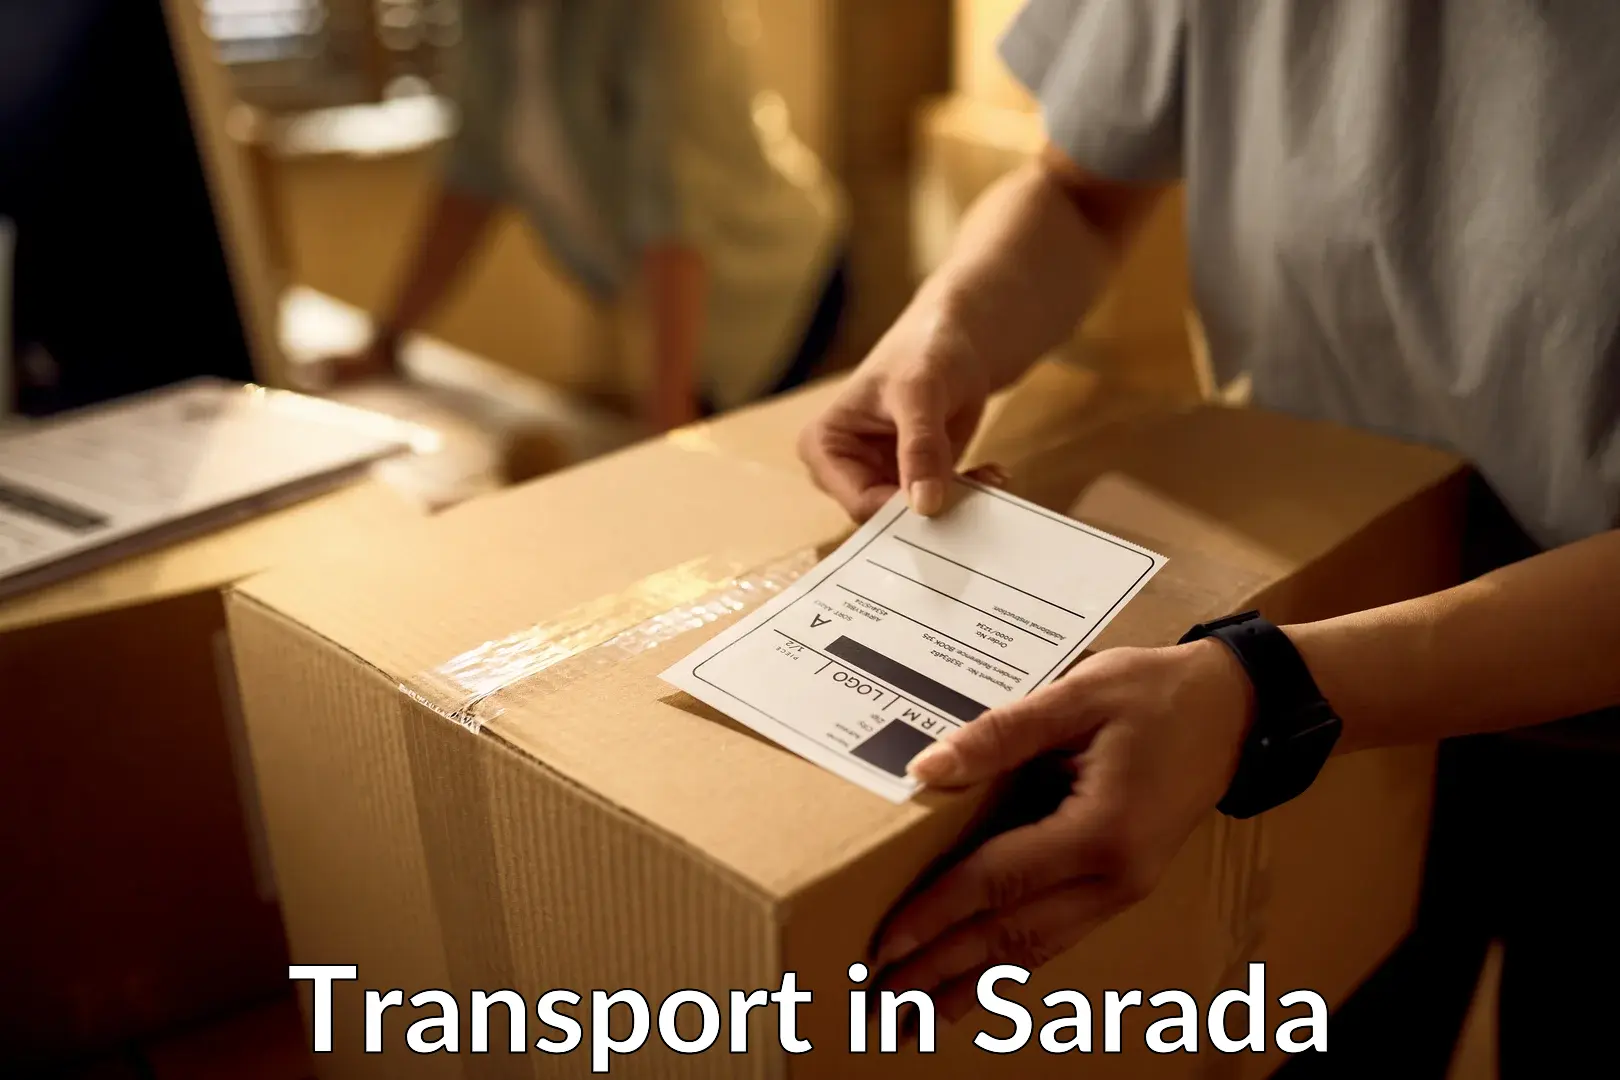 Transportation services in Sarada